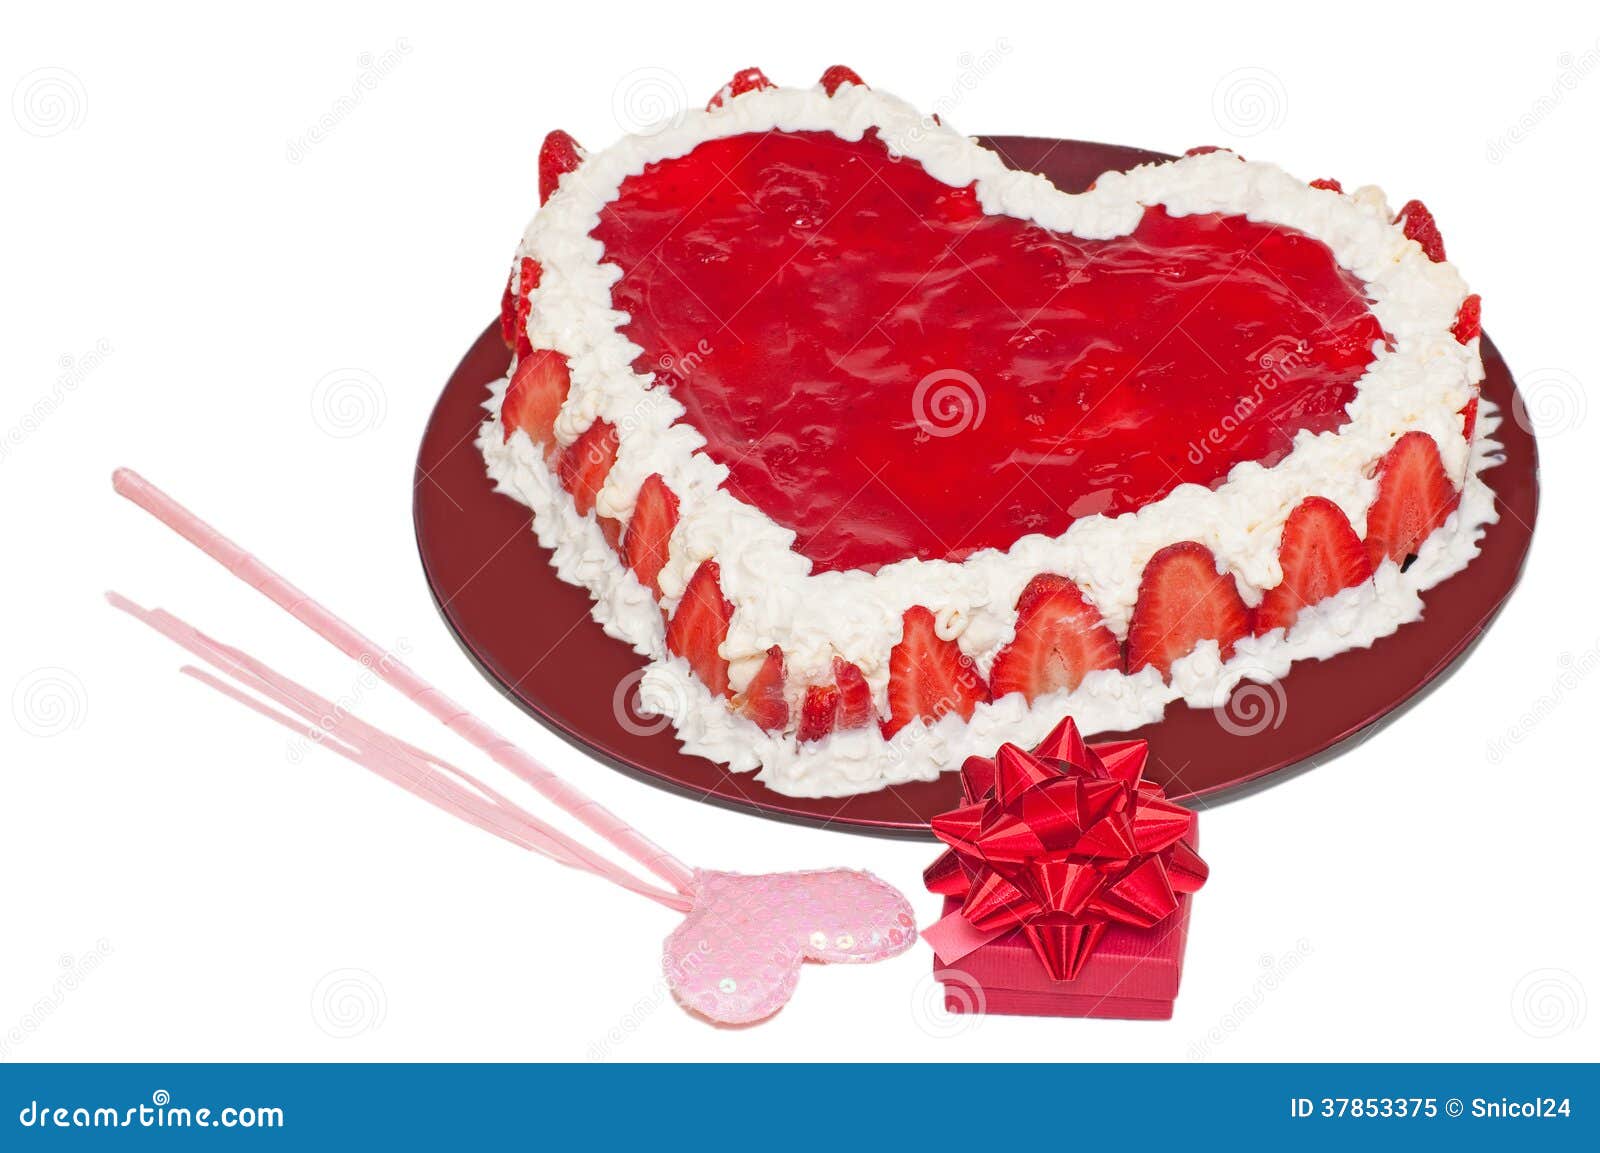 119,906 Love Cake Stock Photos - Free & Royalty-Free Stock Photos ...